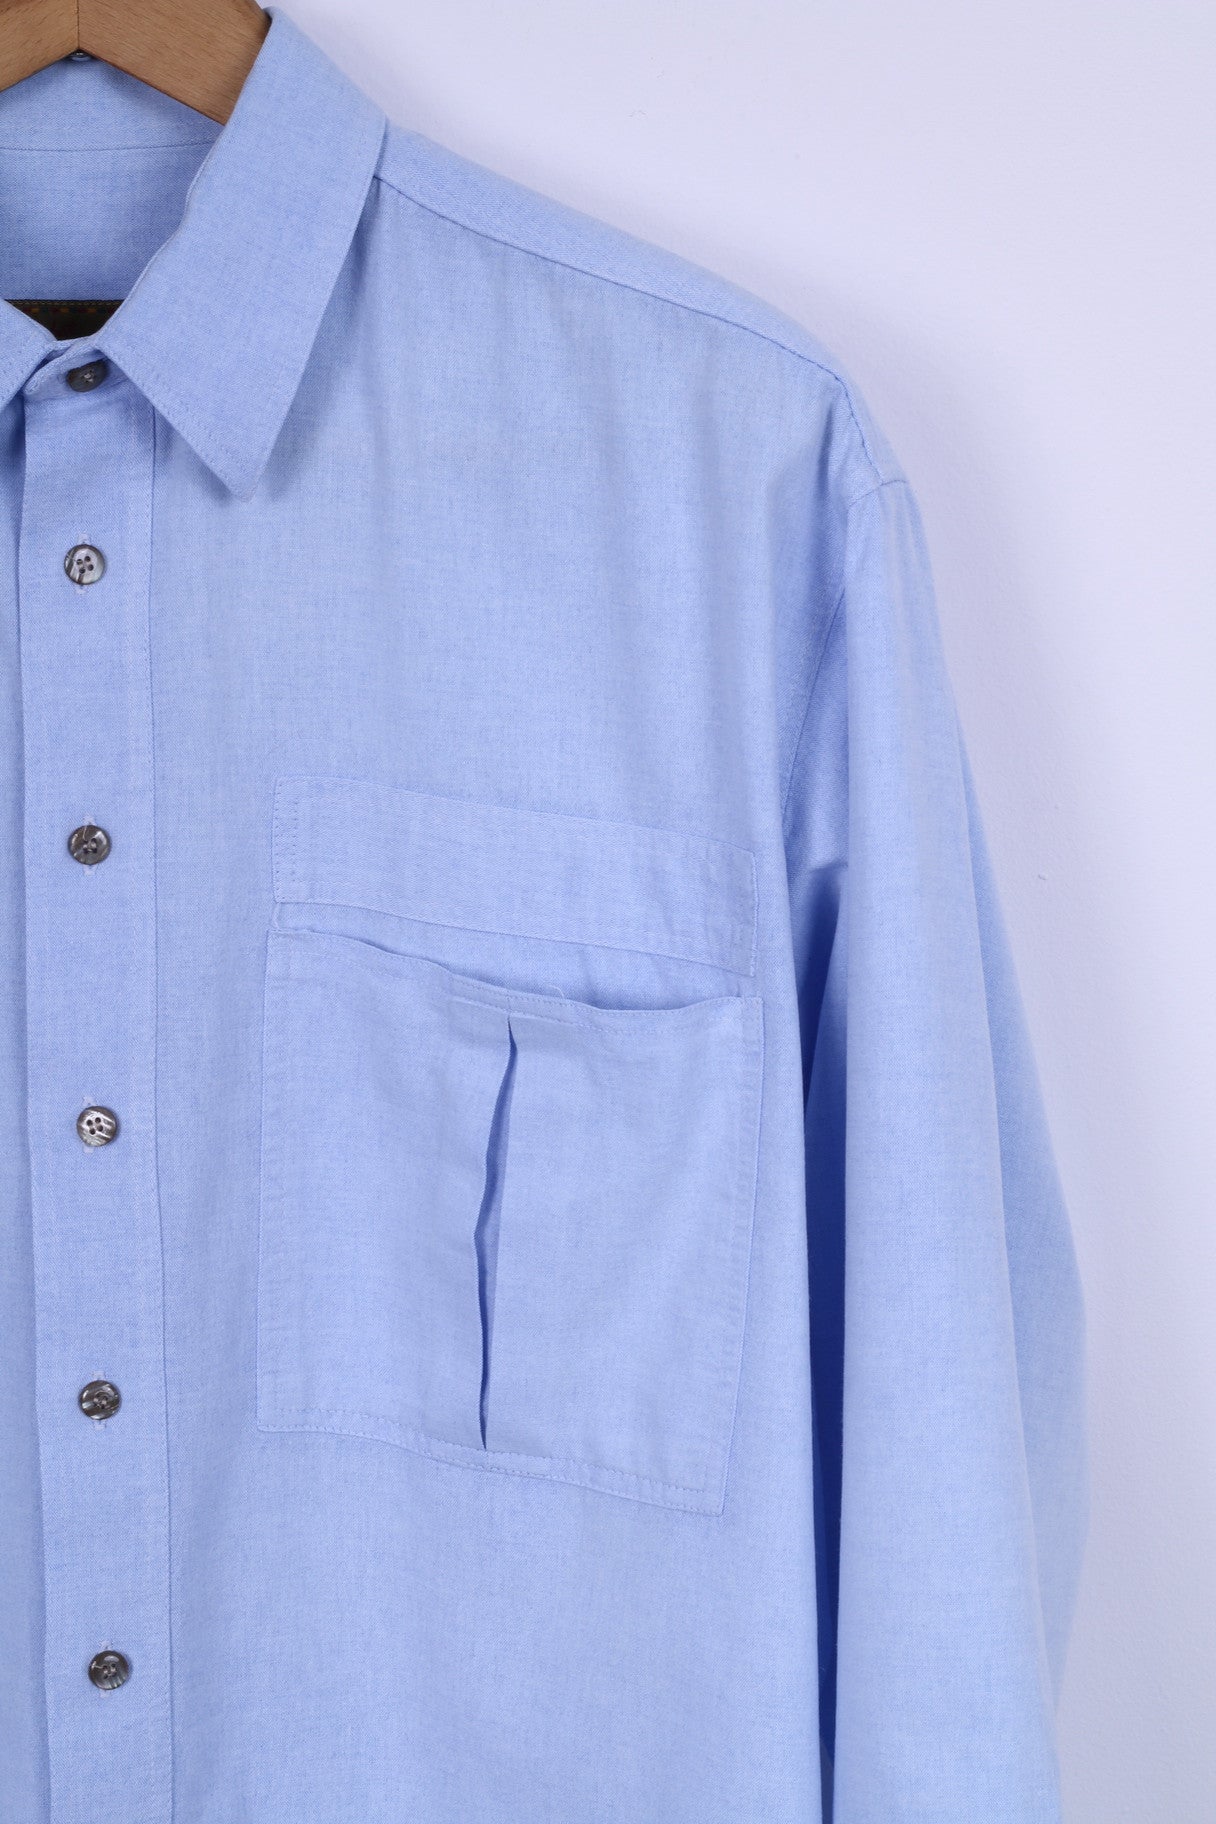 Jean Juubat Mens 42 M Casual Shirt Cotton Blue Long Sleeve Two Pockets